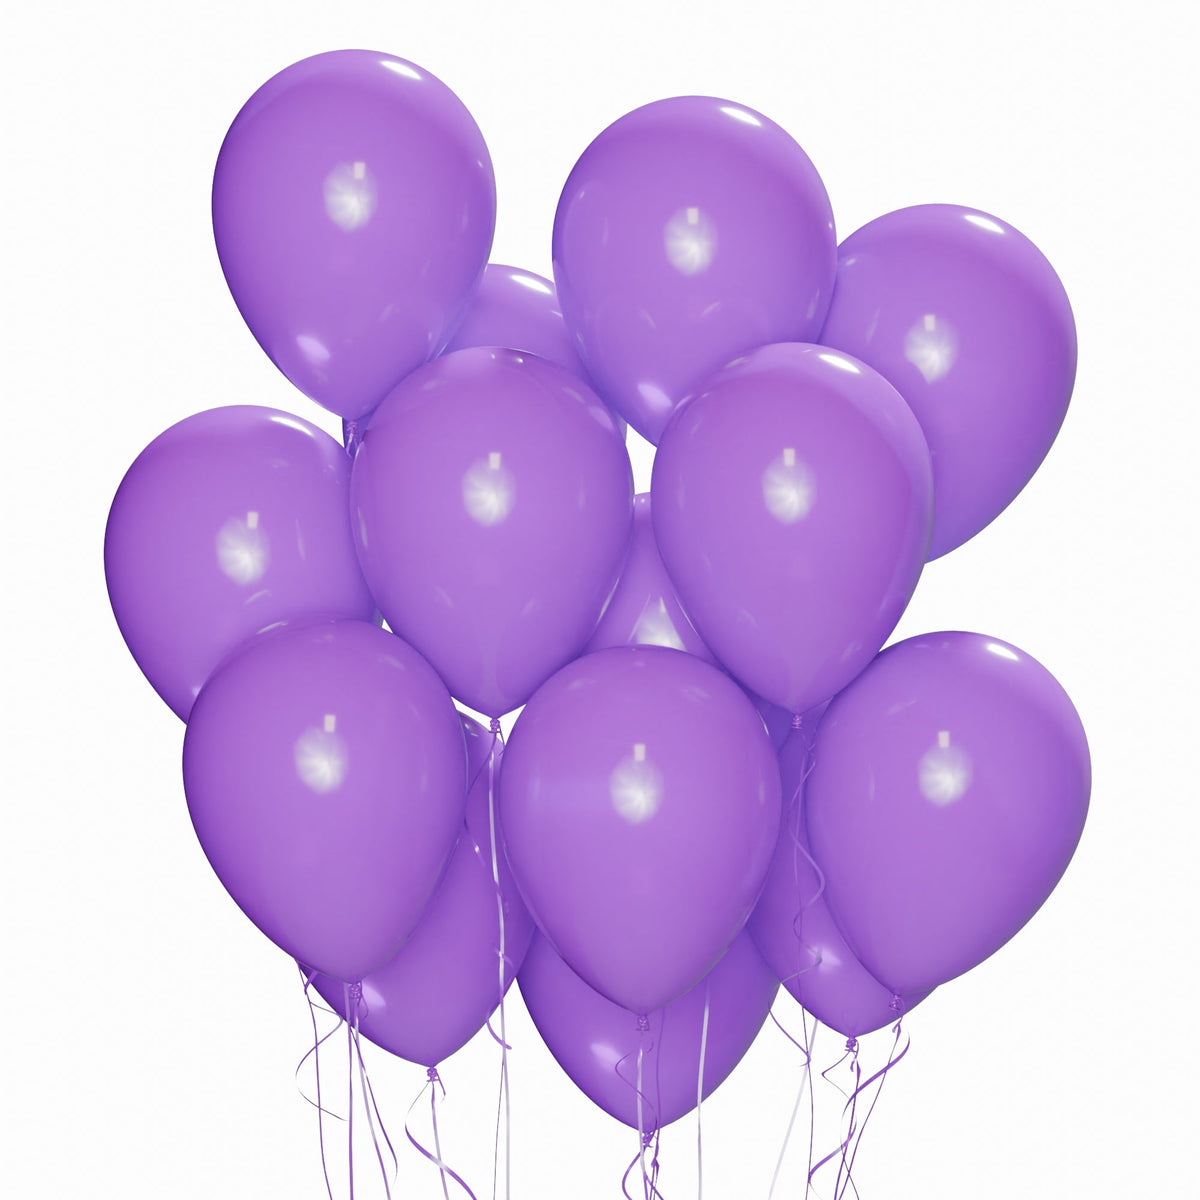 WIDE OCEAN INTERNATIONAL TRADE BEIJING CO., LTD Balloons Purple Latex Balloon 12 Inches, 15 Count 810064197796